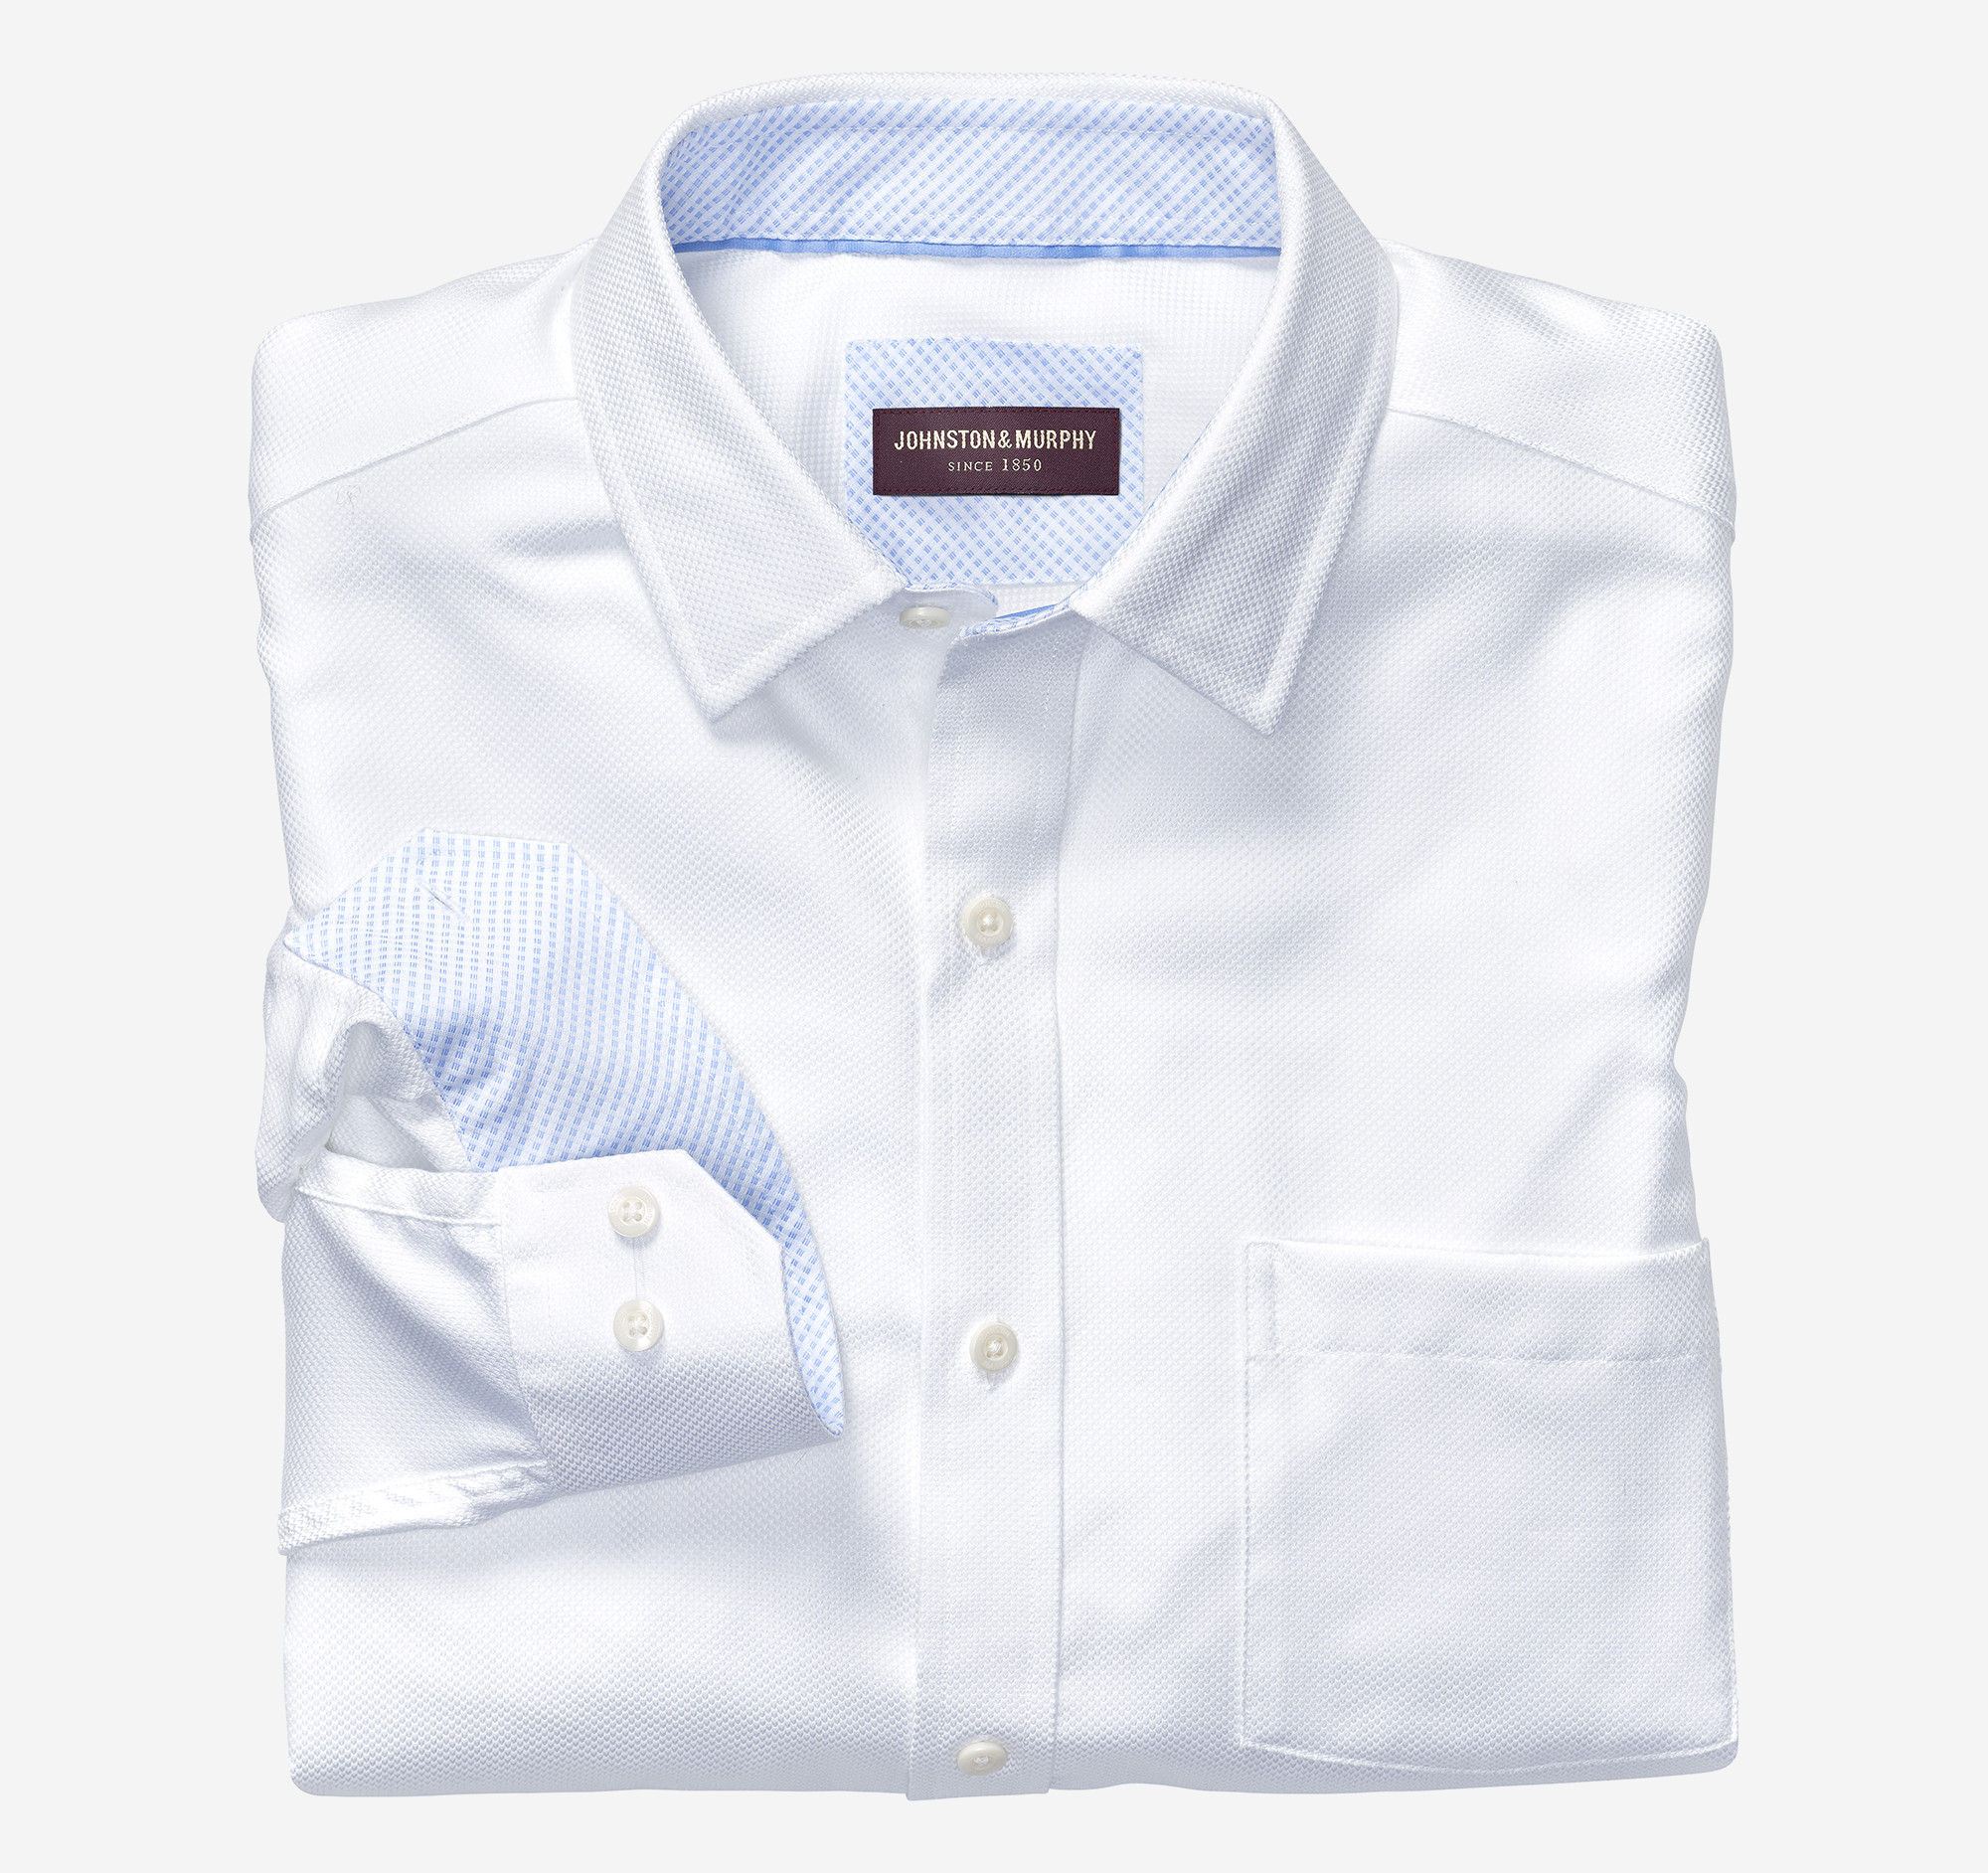 Image of Johnston & Murphy Premium Cotton Long-Sleeve Shirt